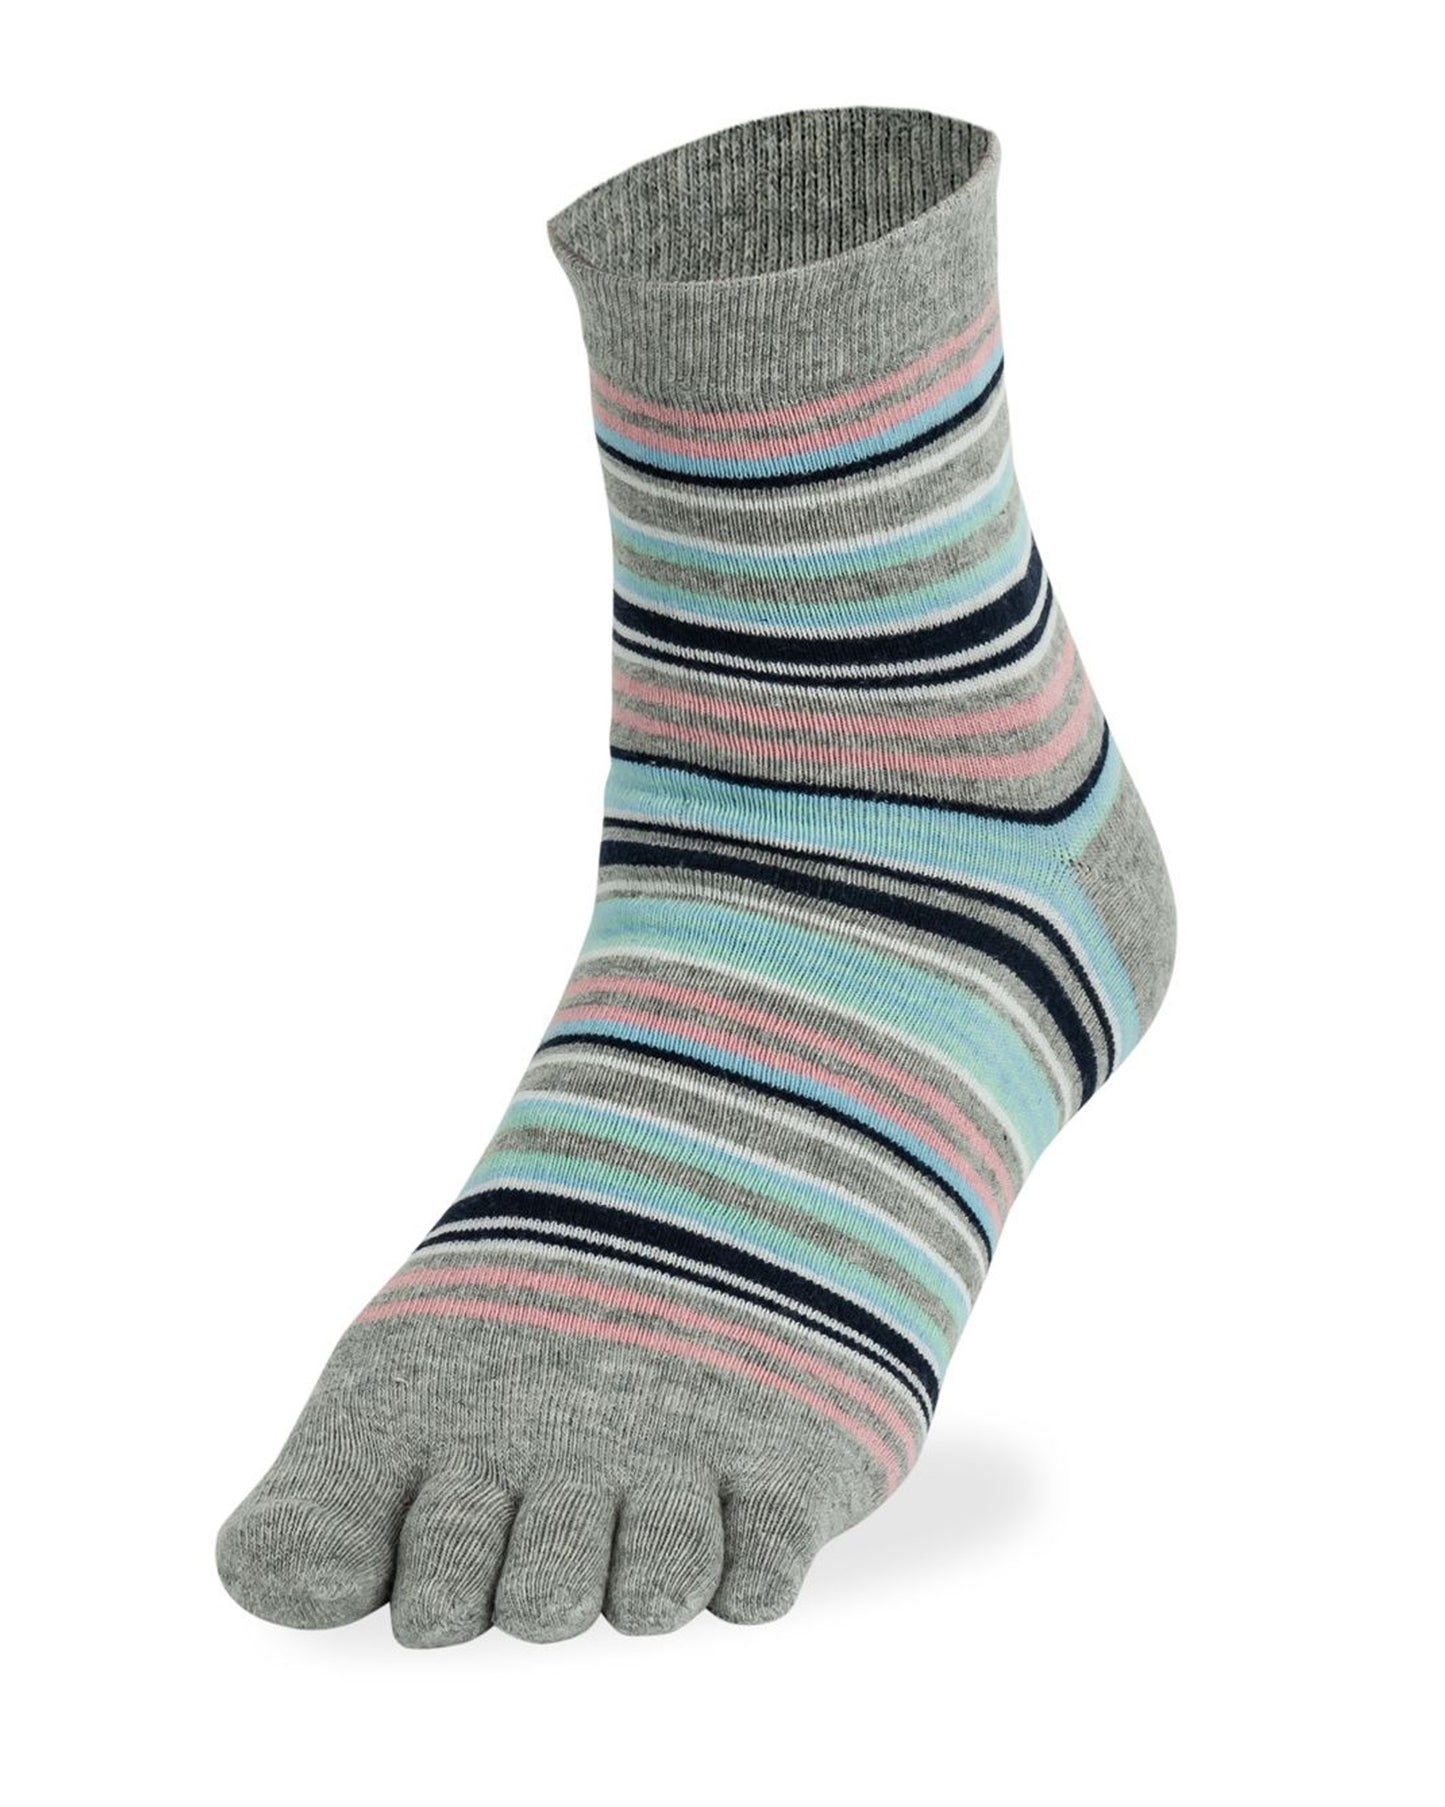 Bonnie Doon Toe Sock Funky Stripes - Light grey, pale pink, navy, light blue and mint green horizontal striped crew length cotton mix toe socks.